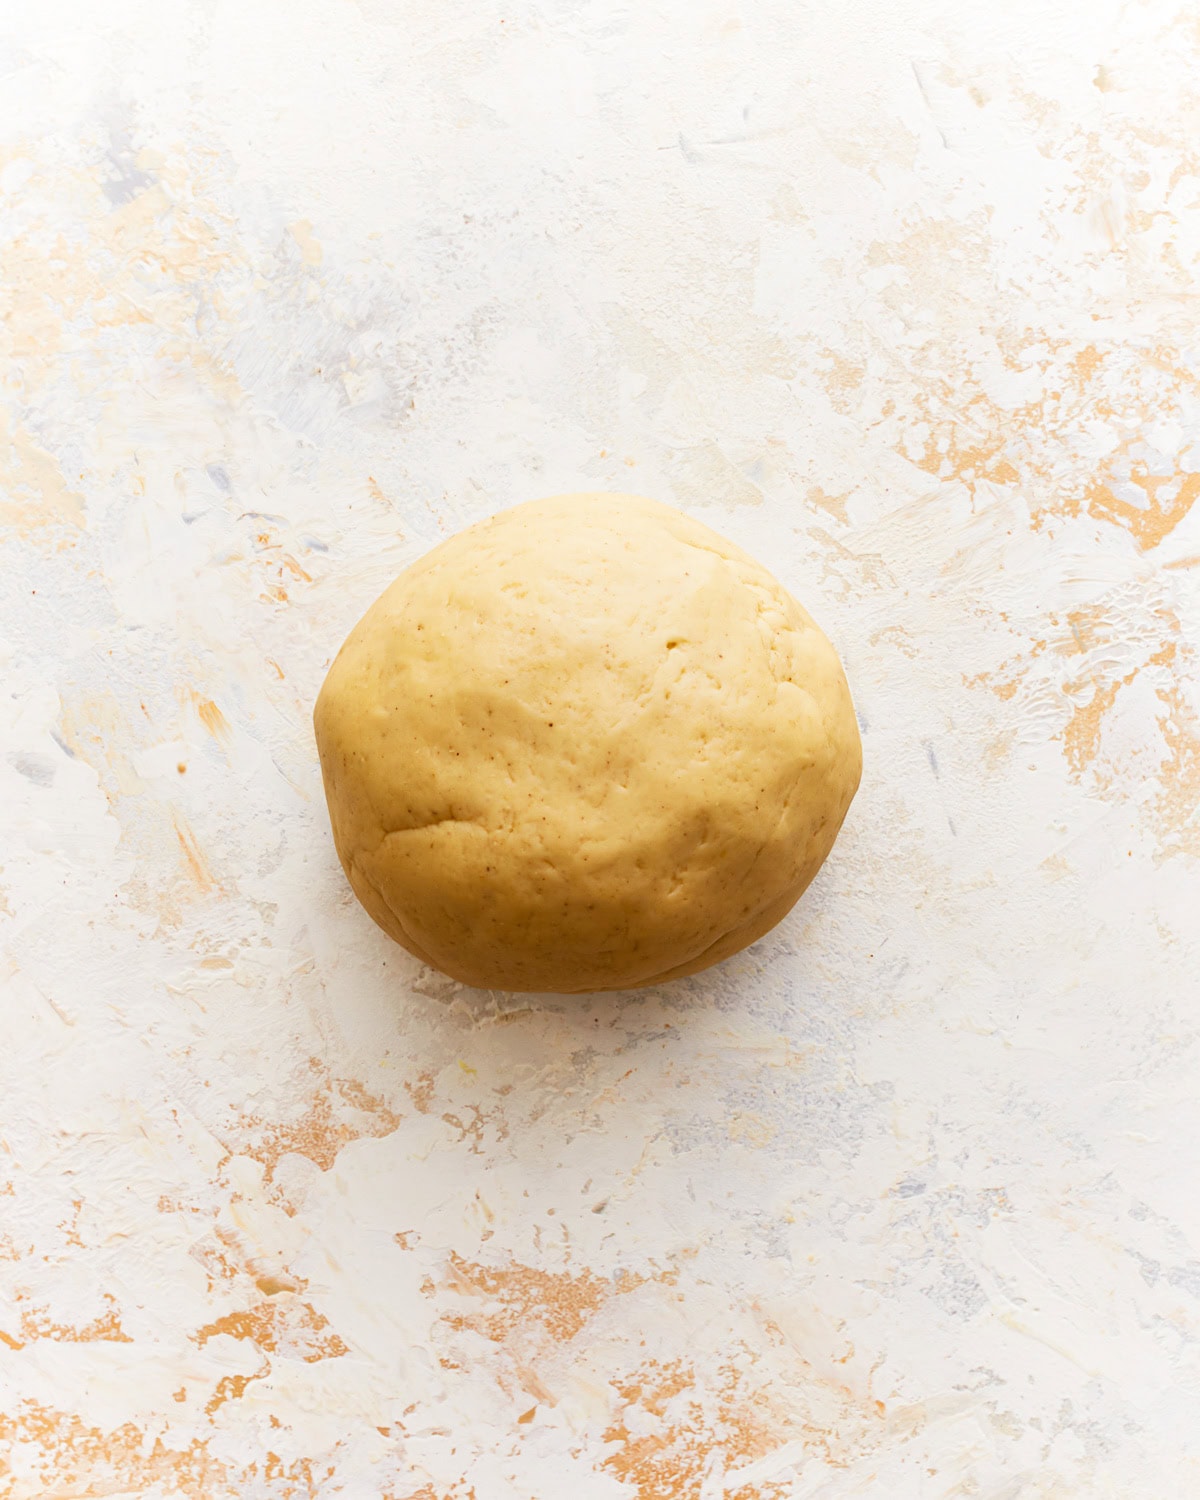 kneaded gluten-free pasta dough ball.